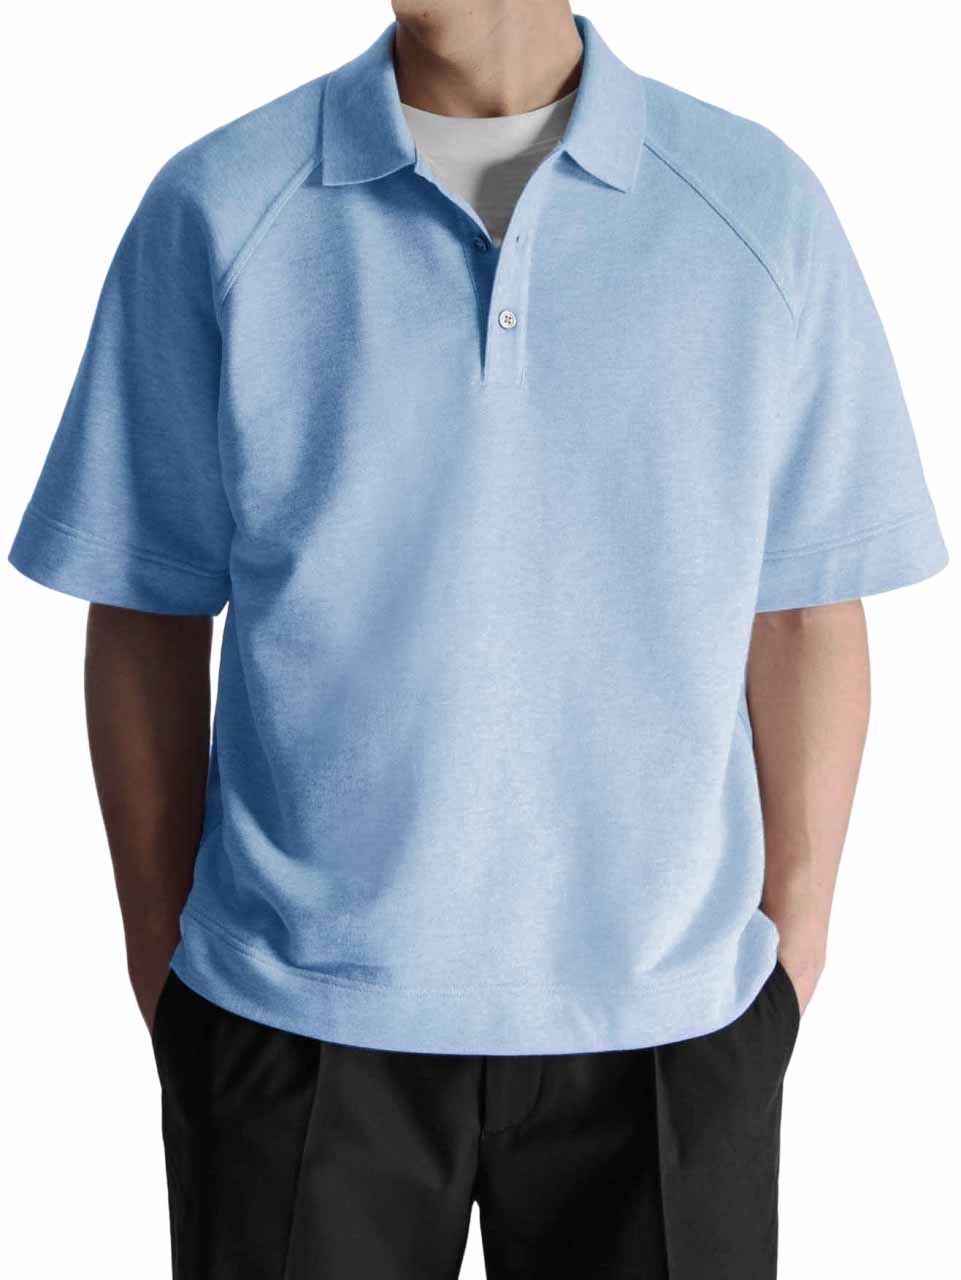 Men's Fashion Pitted Fabric Zipper Short Sleeve Polo Shirt